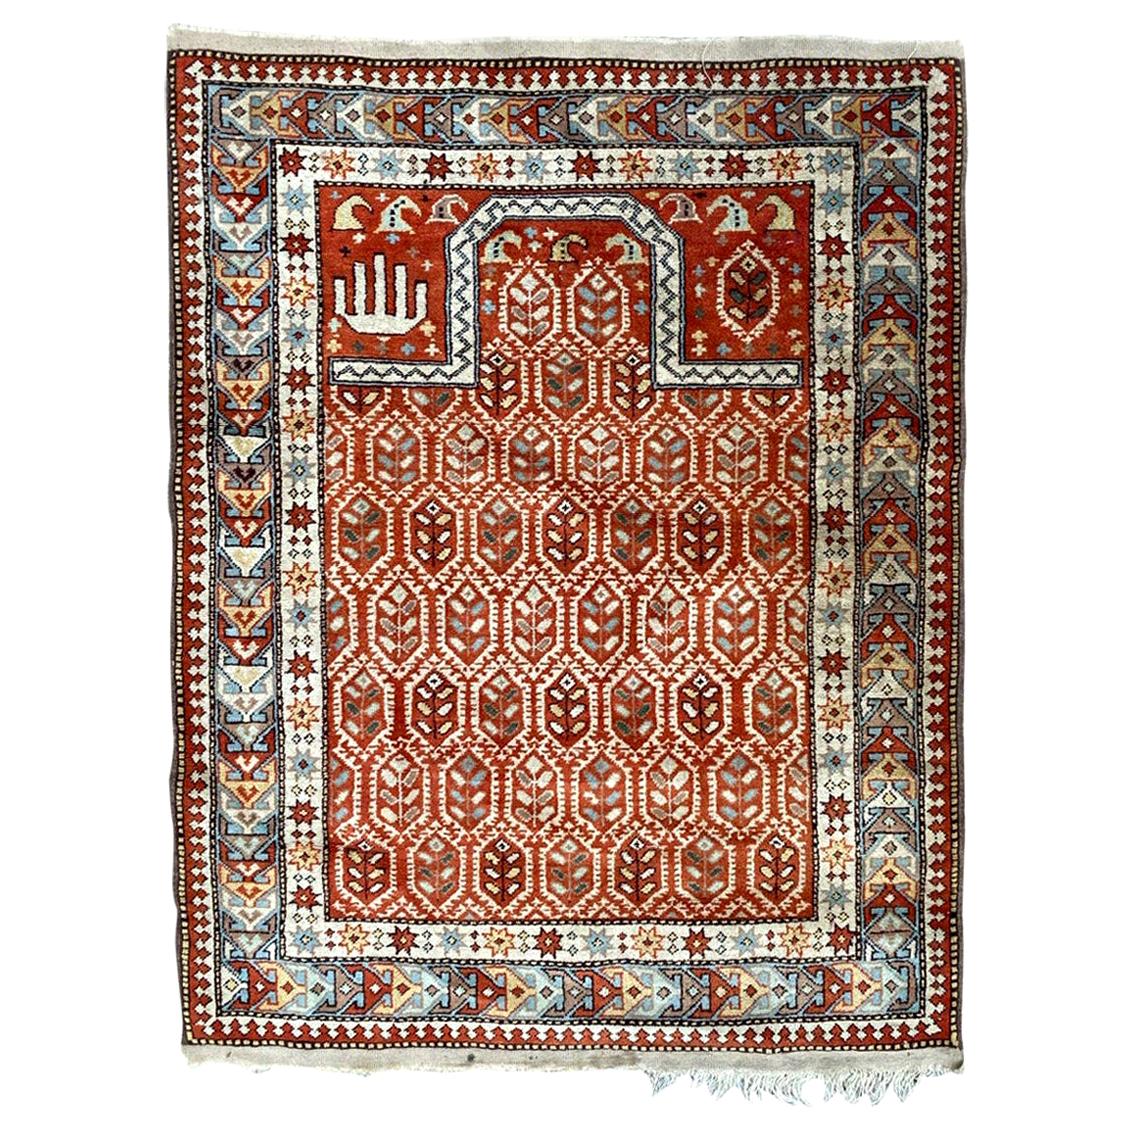 Bobyrug’s Beautiful Vintage Turkish Prayer Rug For Sale